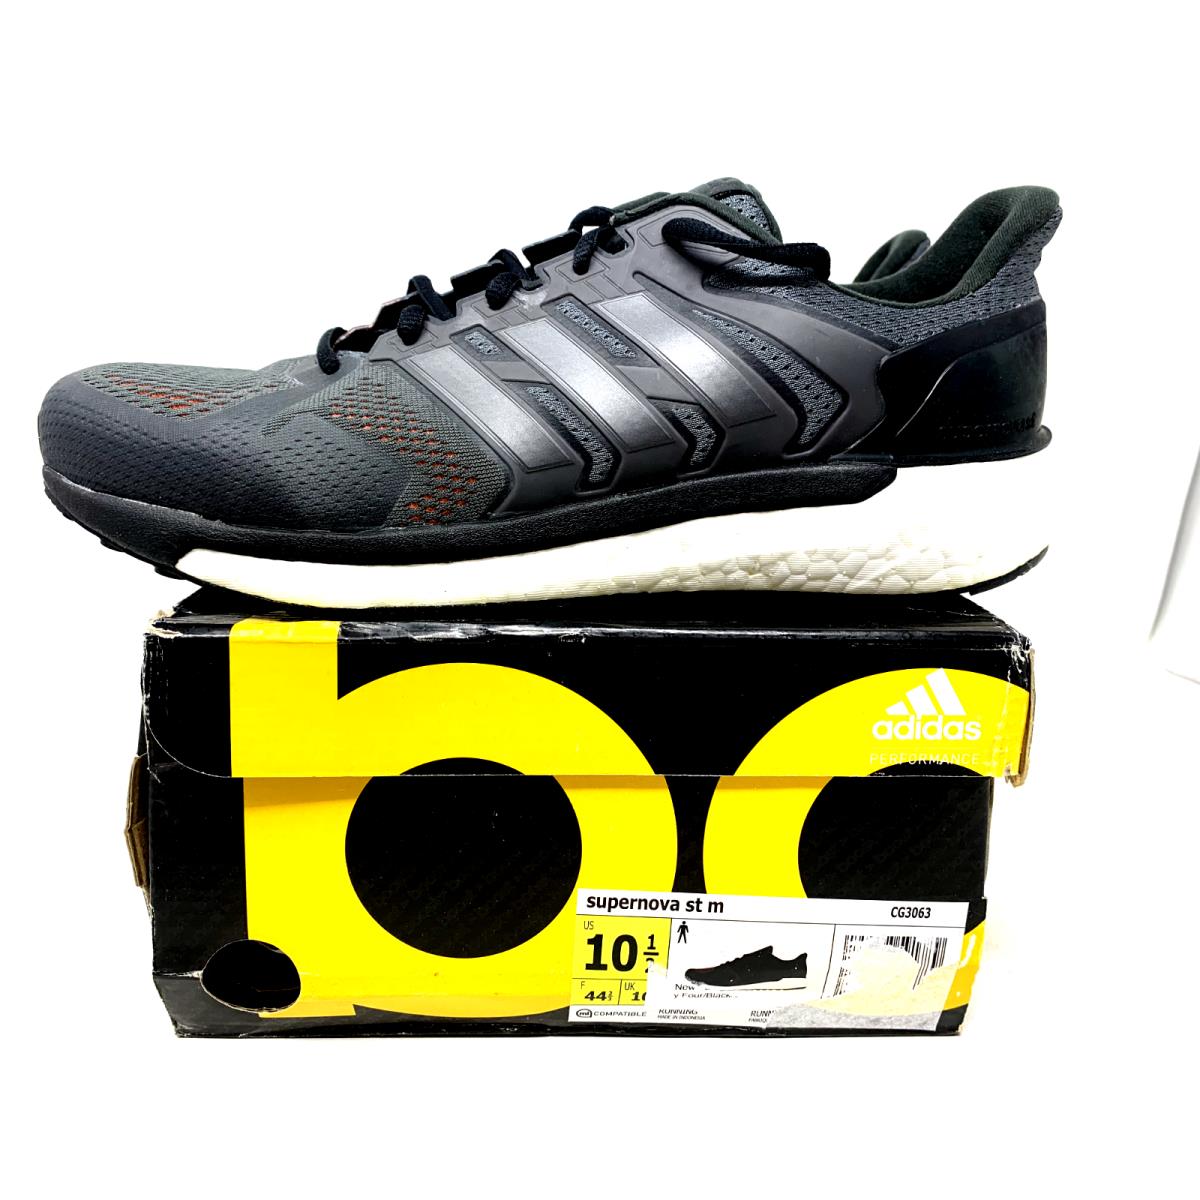 Adidas Supernova ST Boost Men`s 10.5 Black/orange Athletic Running Shoes